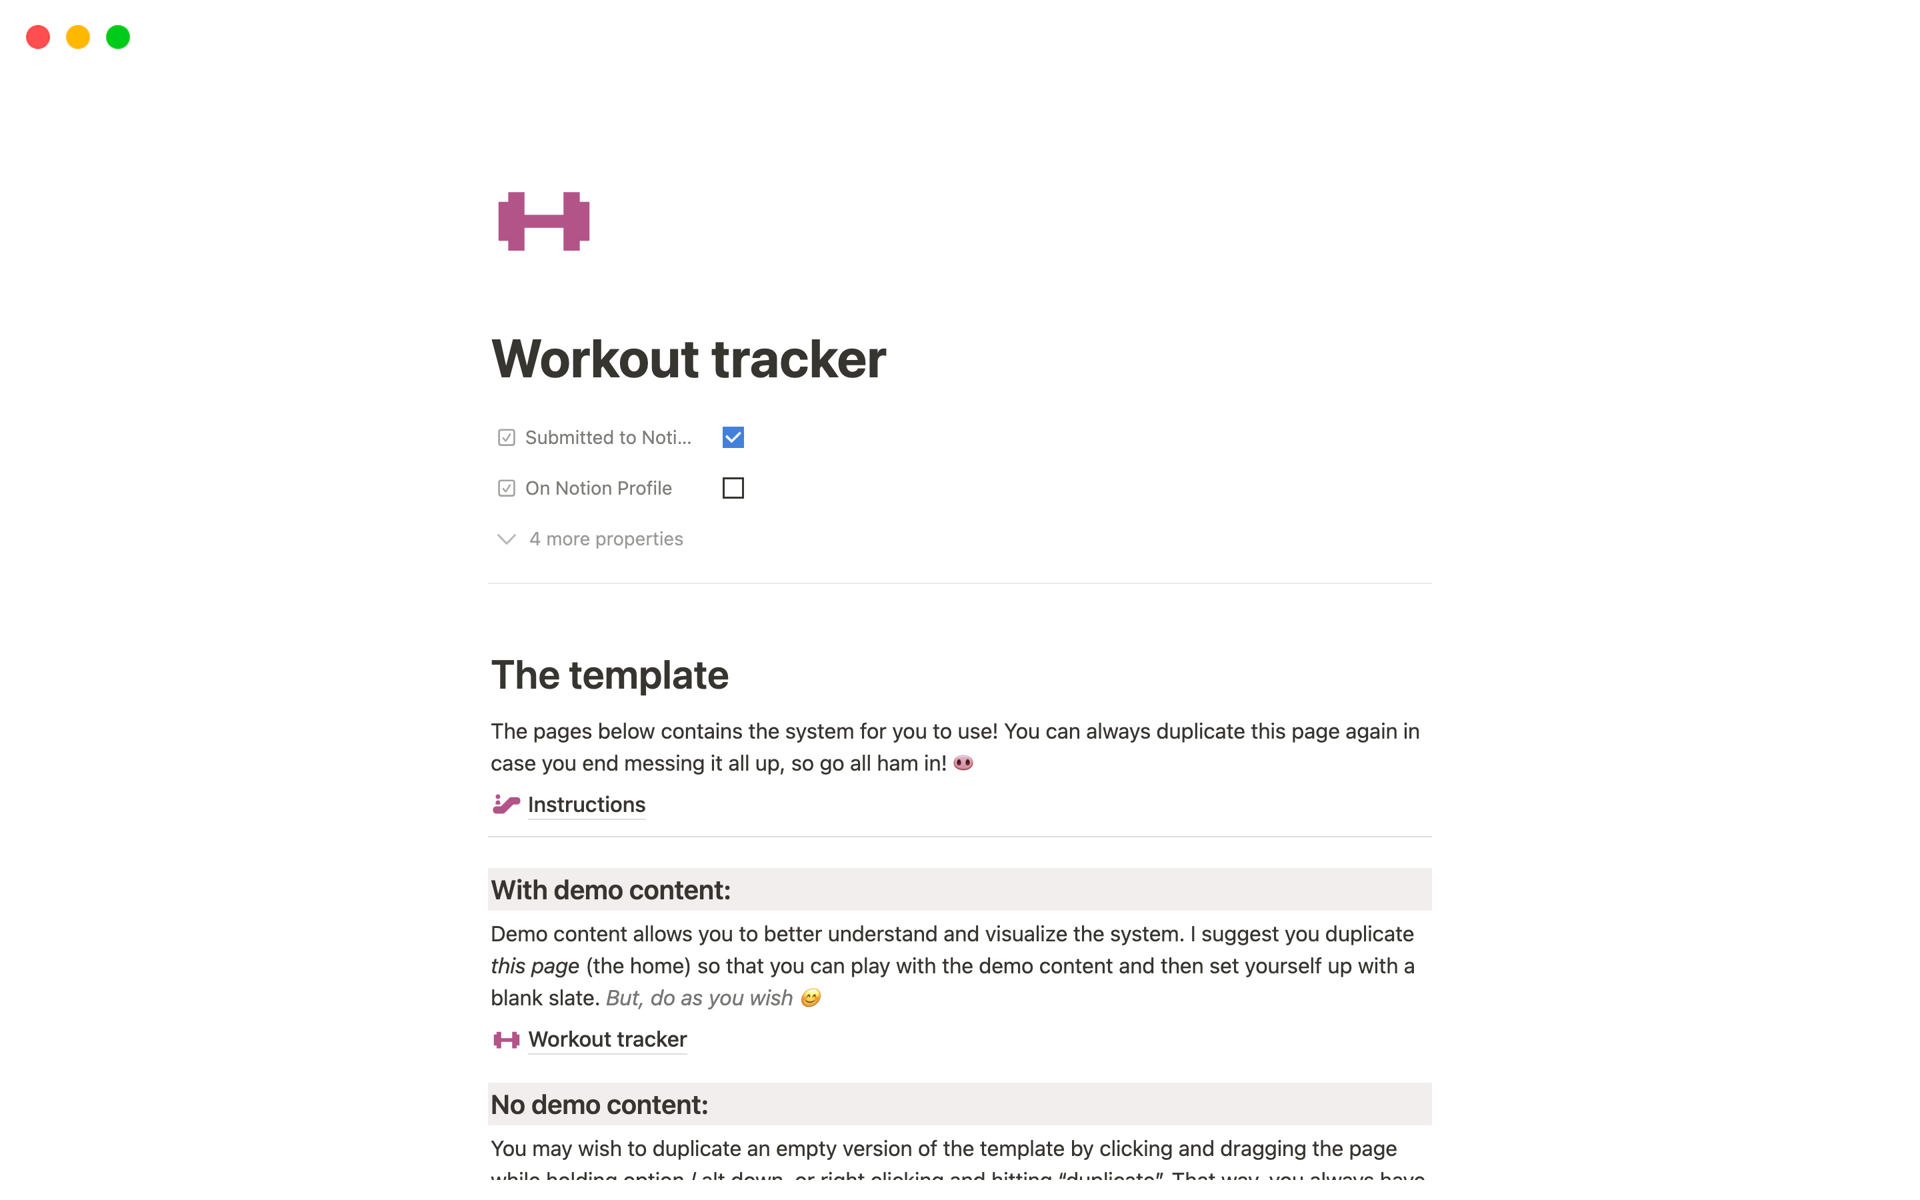 Vista previa de una plantilla para Workout tracker